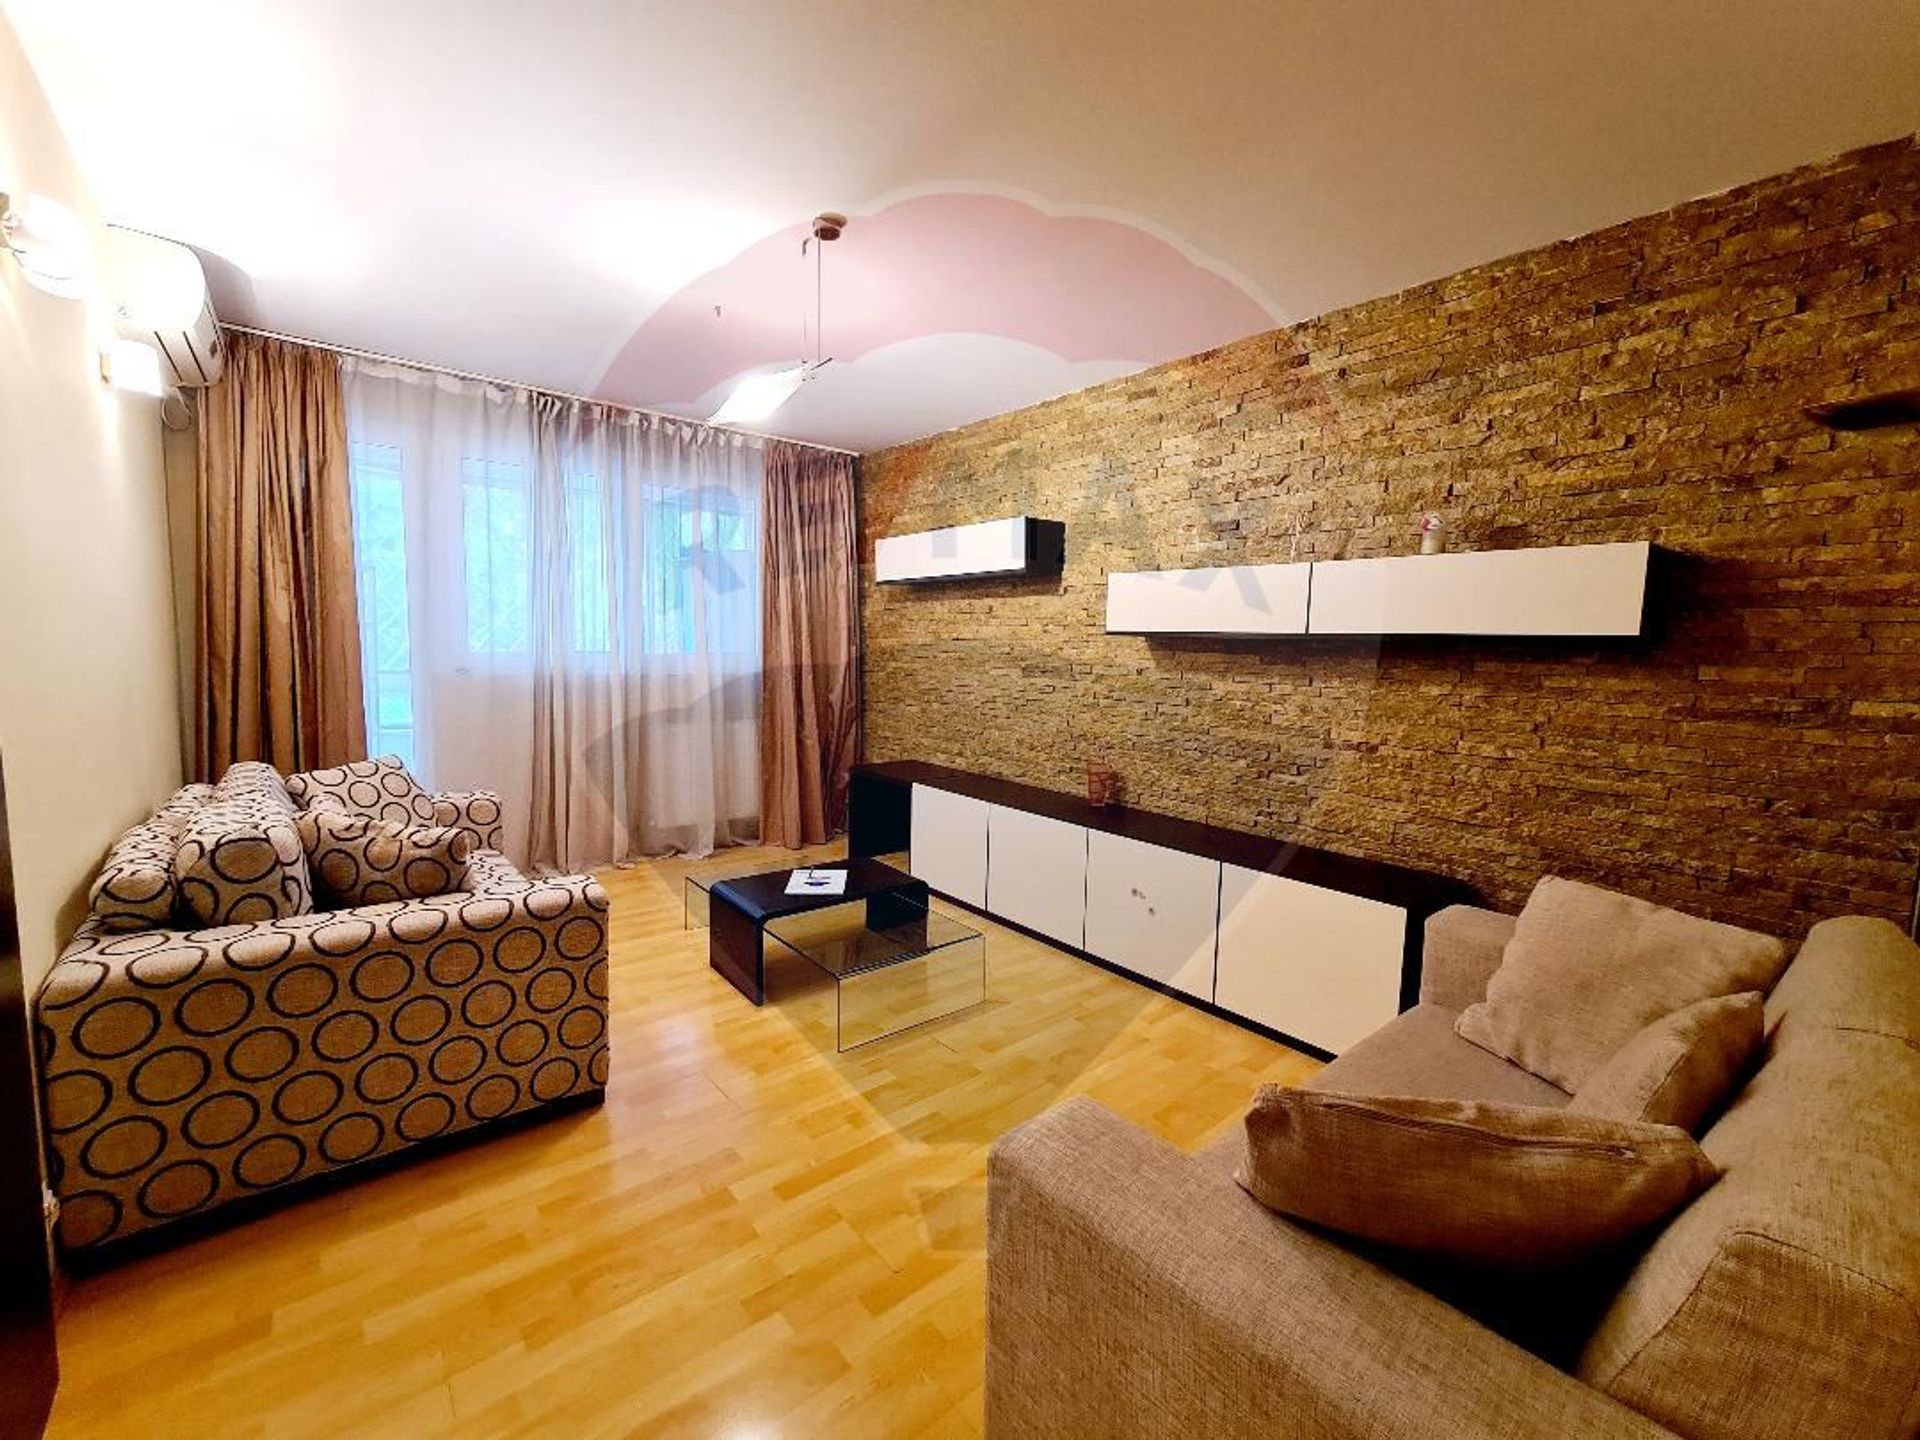 Apartament 2 camere inchiriere in bloc de apartamente Bucuresti, Drumul Taberei